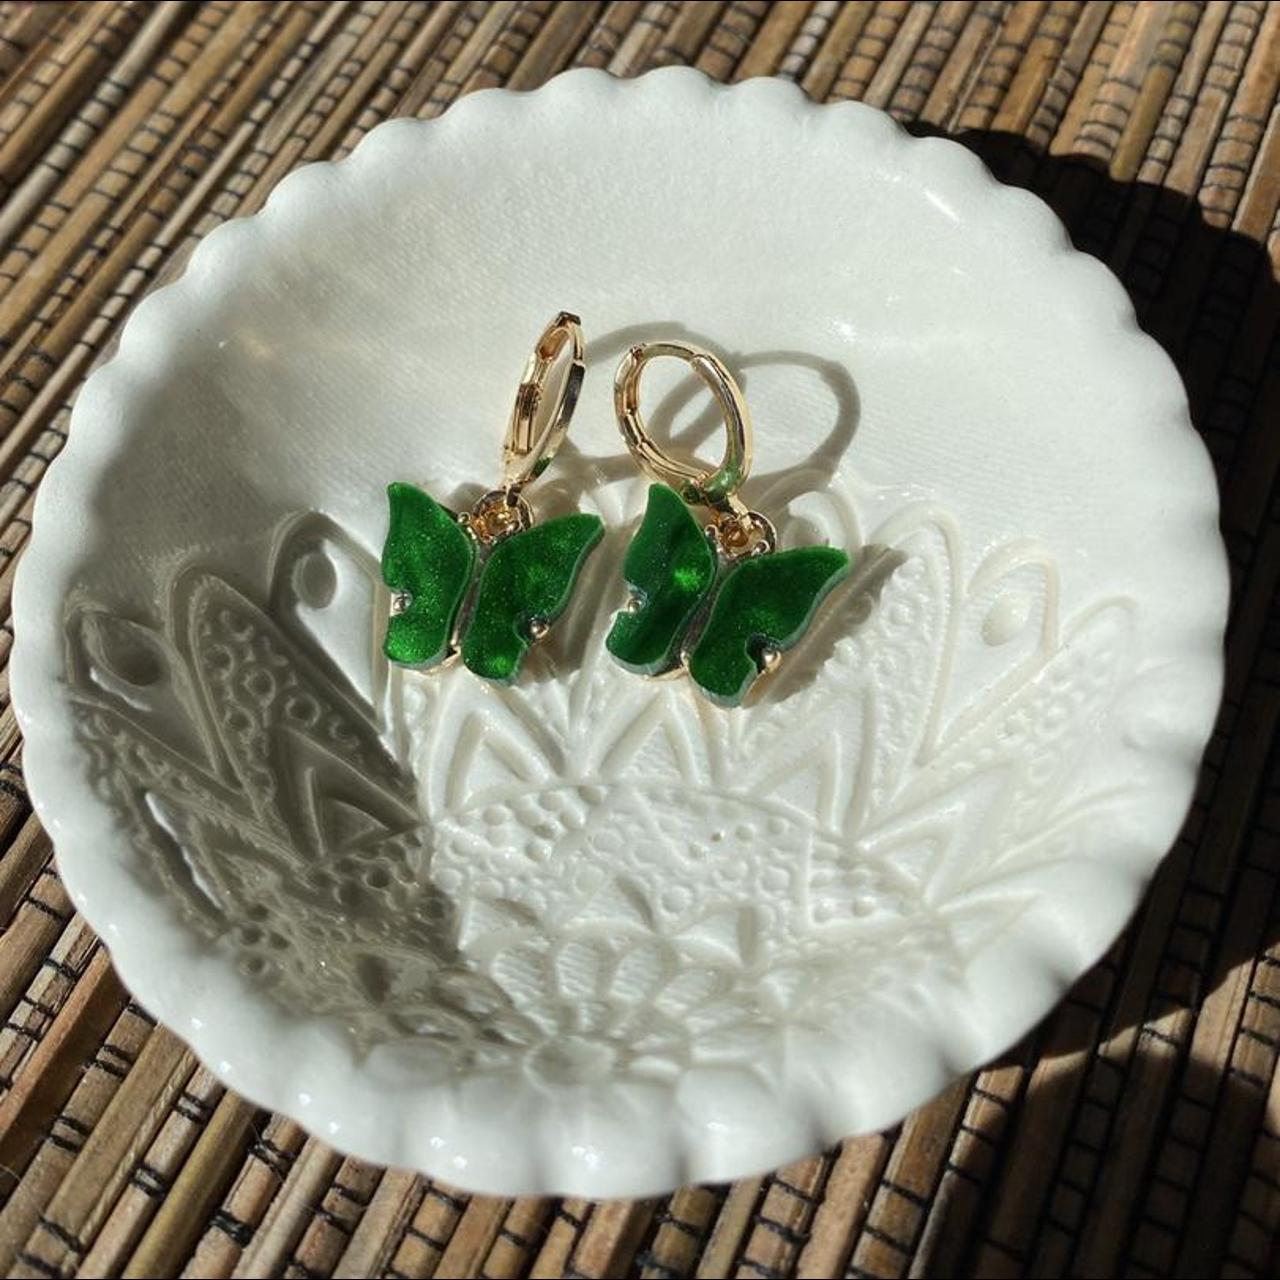 Product Image 2 - Green butterfly pendant dainty earrings
Brand